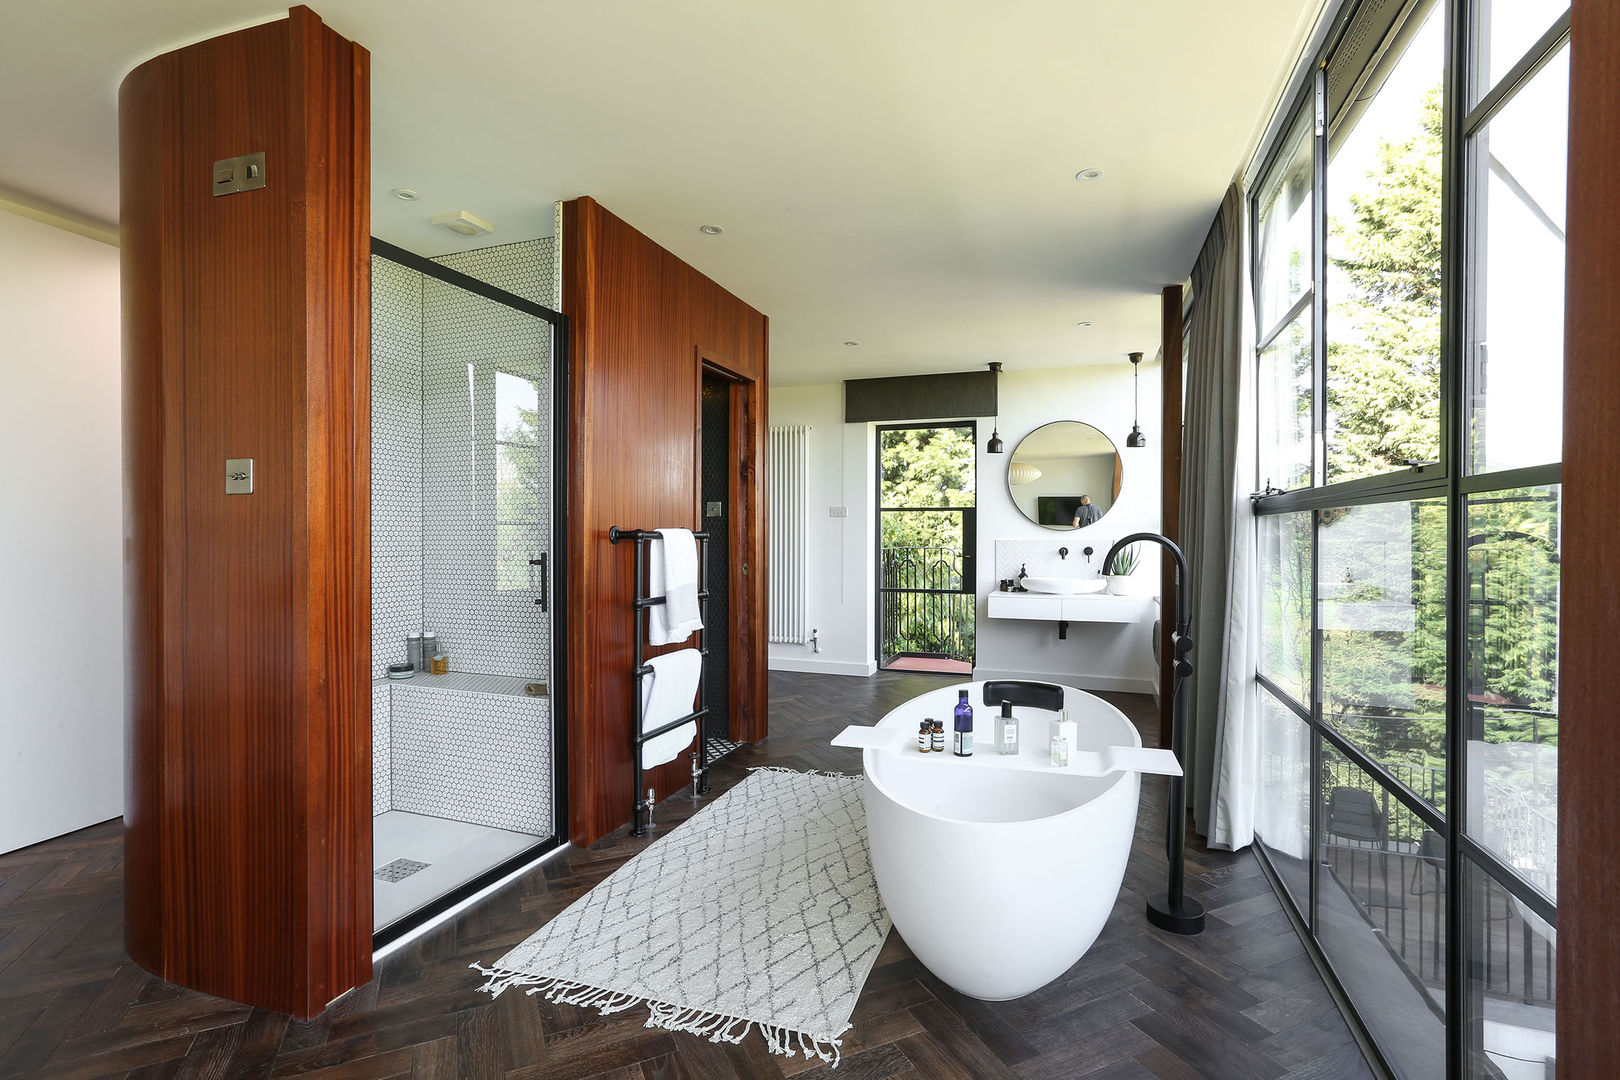 Greenacre Martins Camisuli Architects & Designers حمام extension,attic,openplan,bedroom,bathroom